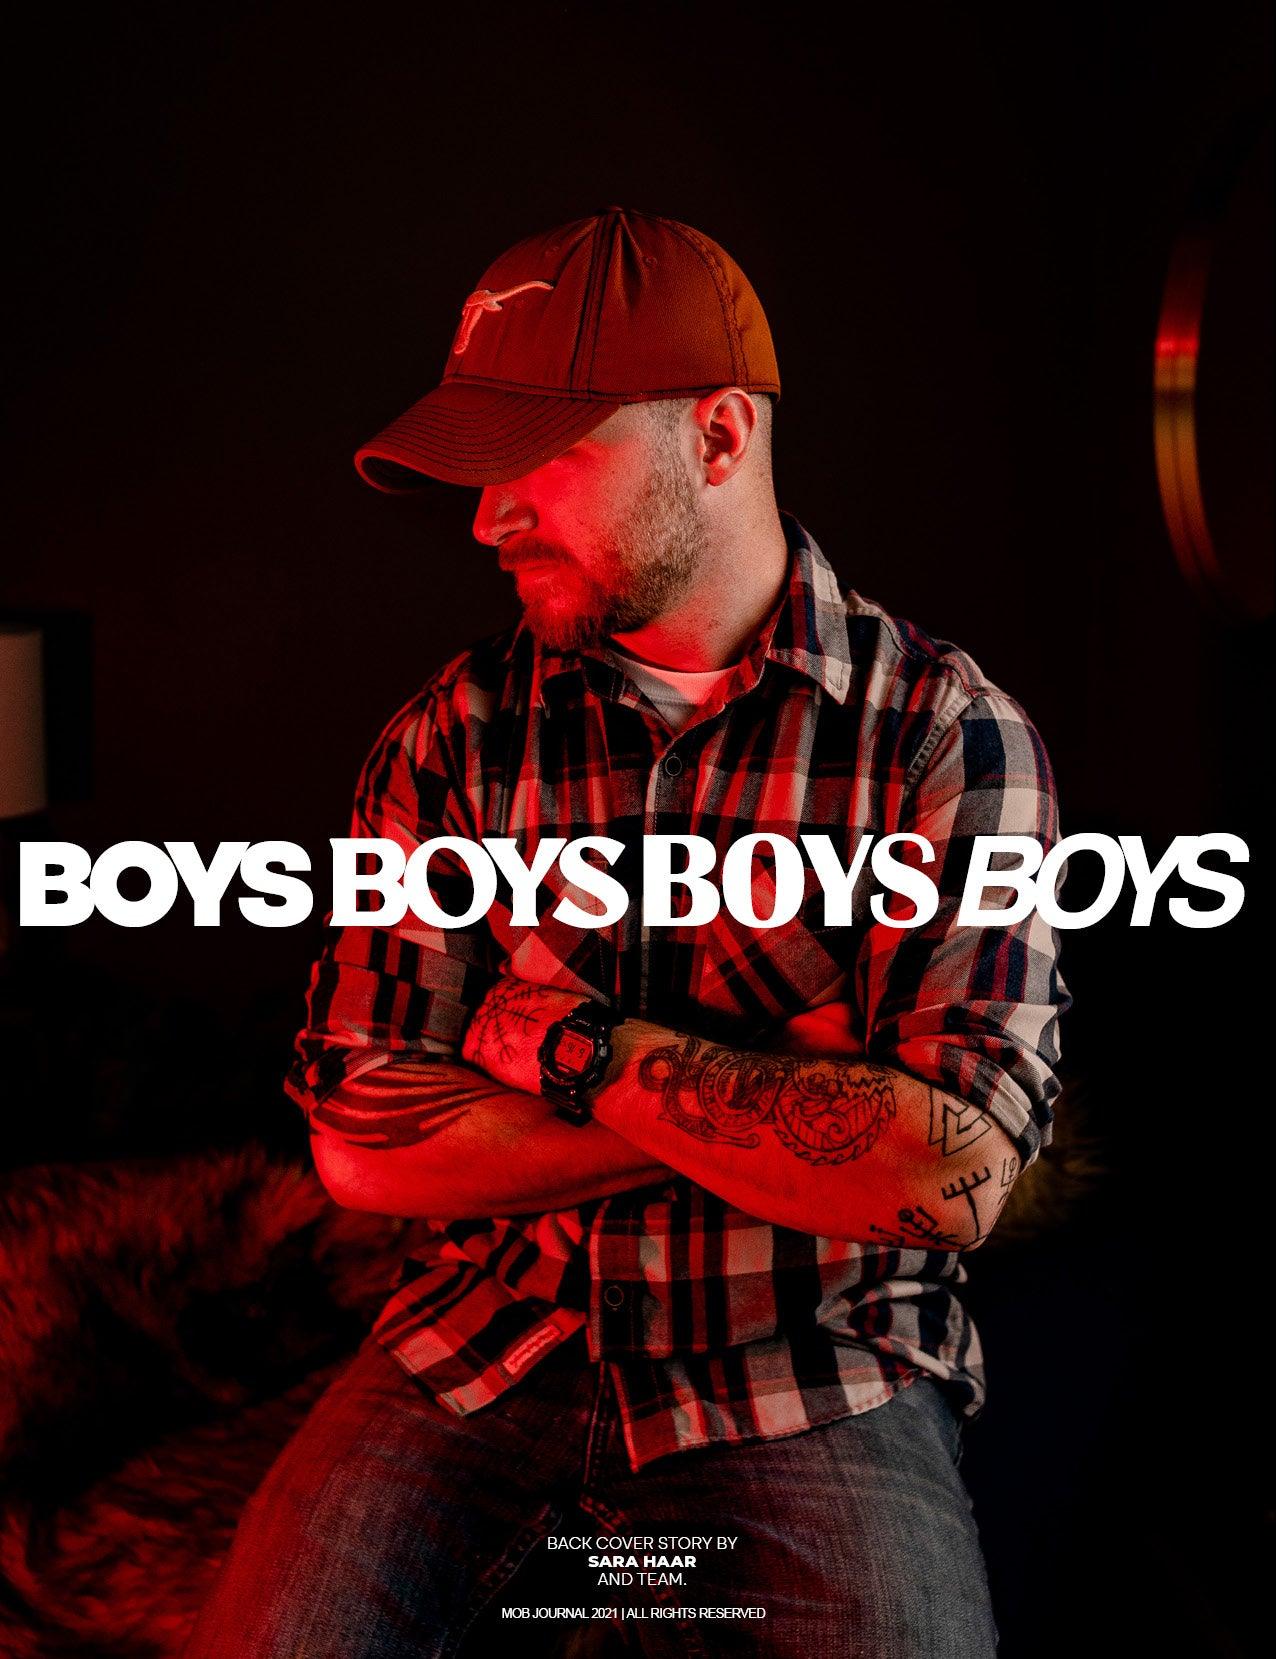 BOYS BOYS BOYS BOYS | VOLUME TEN | ISSUE #20 - Mob Journal